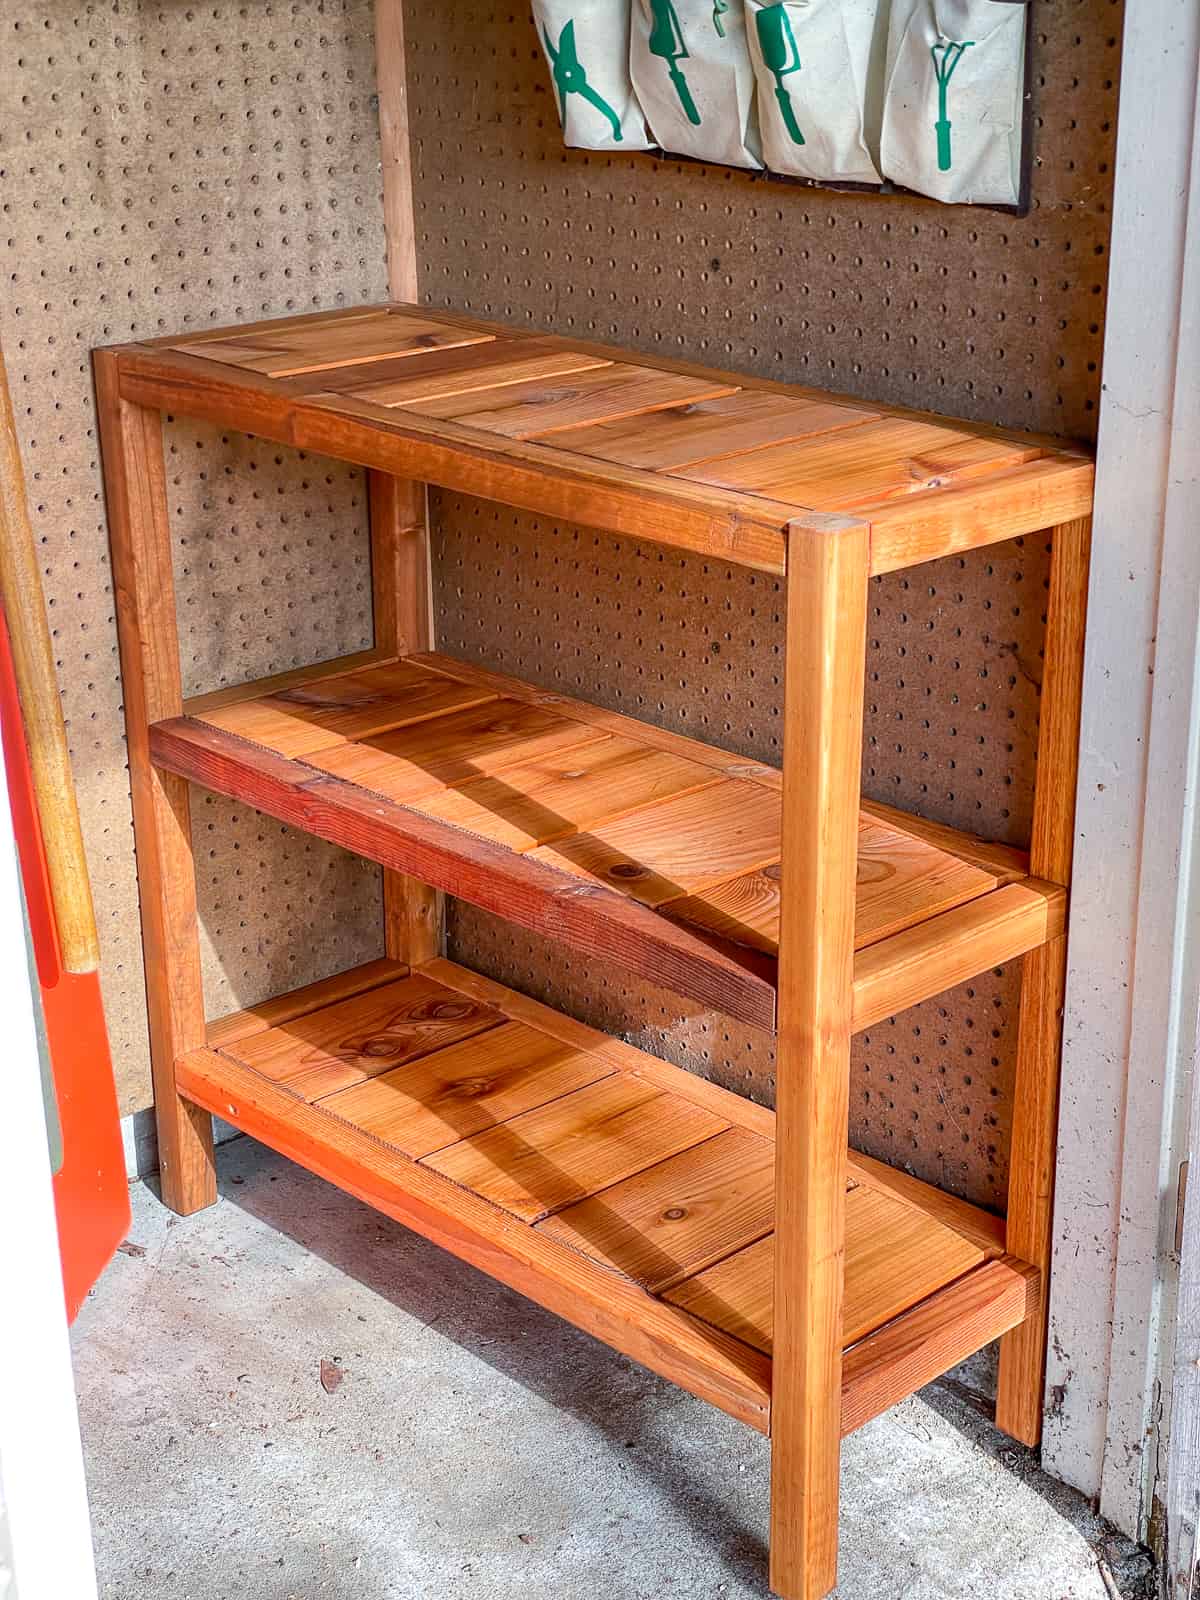 DIY outdoor shelves in garden shed